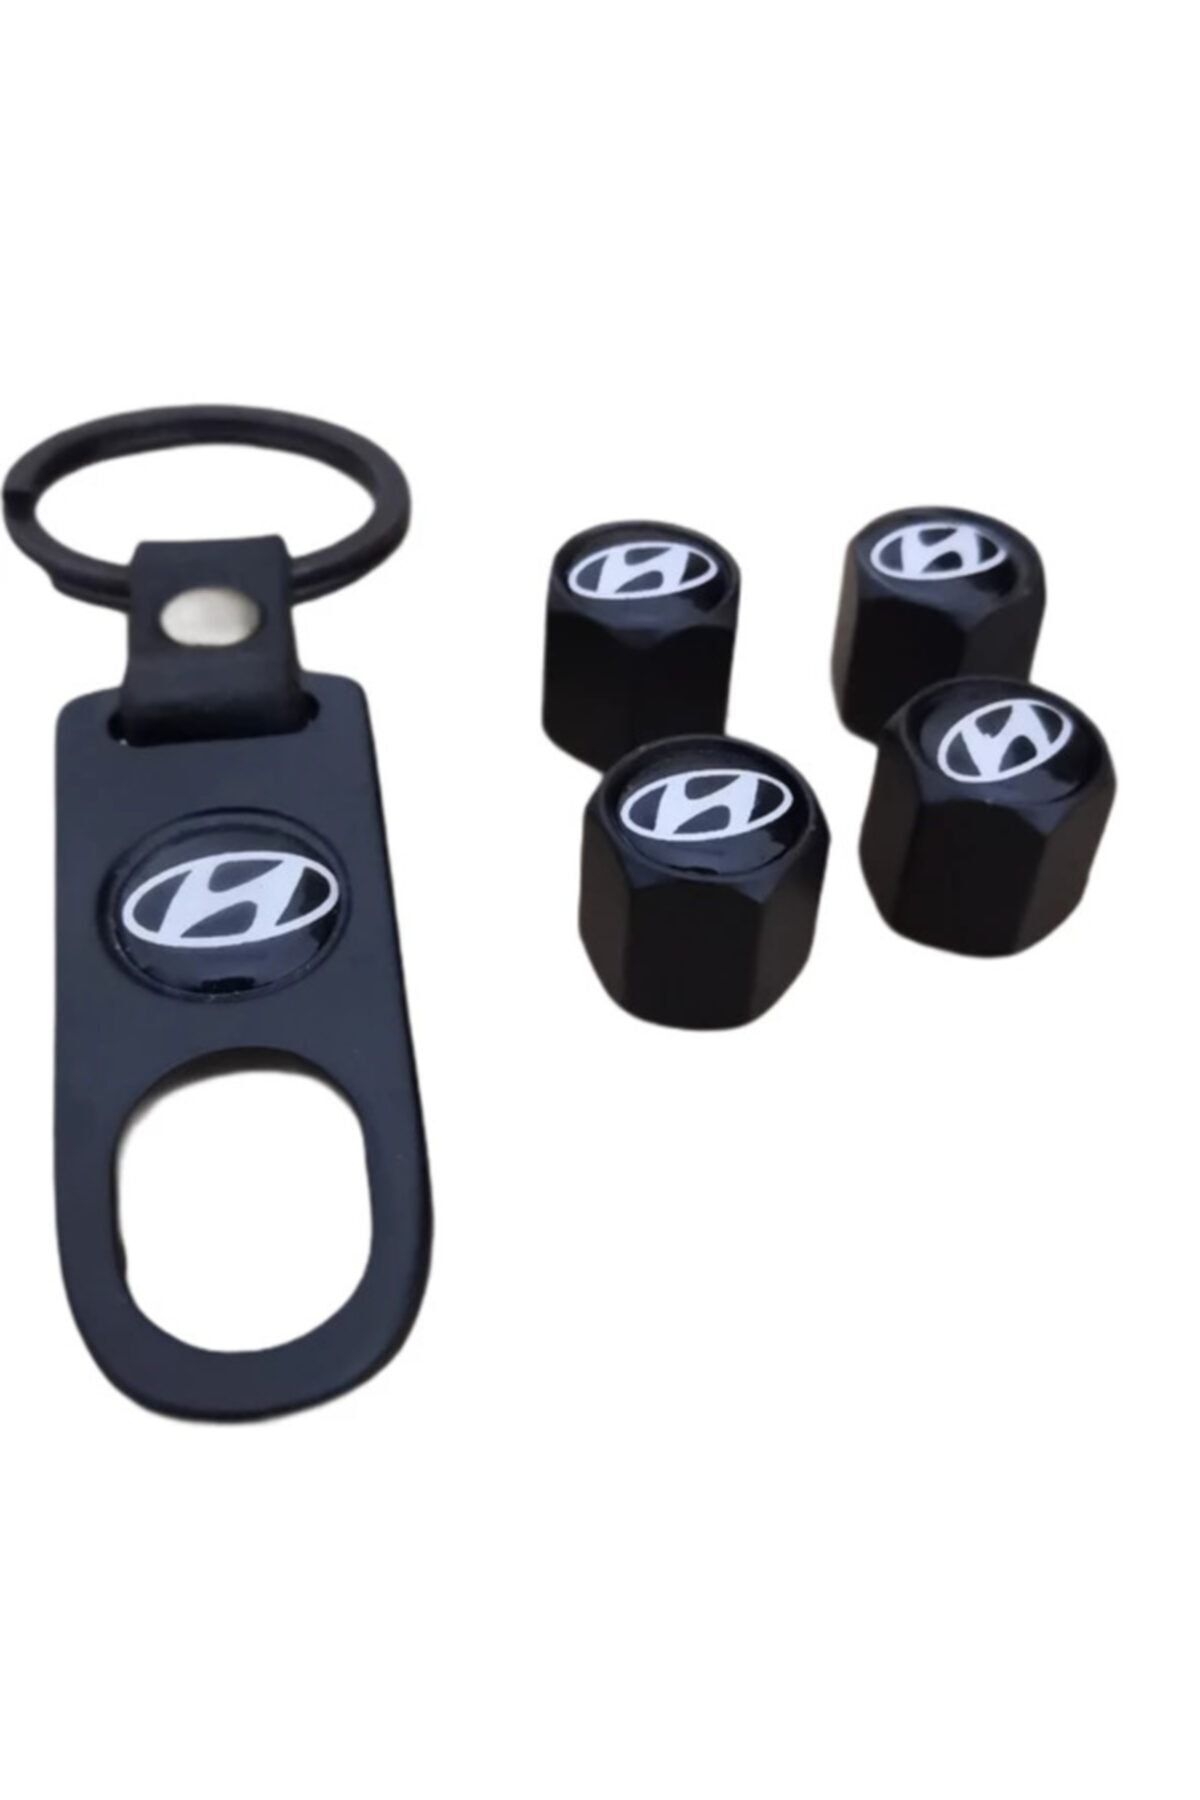 Hyundai Metal Anahtarlık Ve Sibop Kapağı